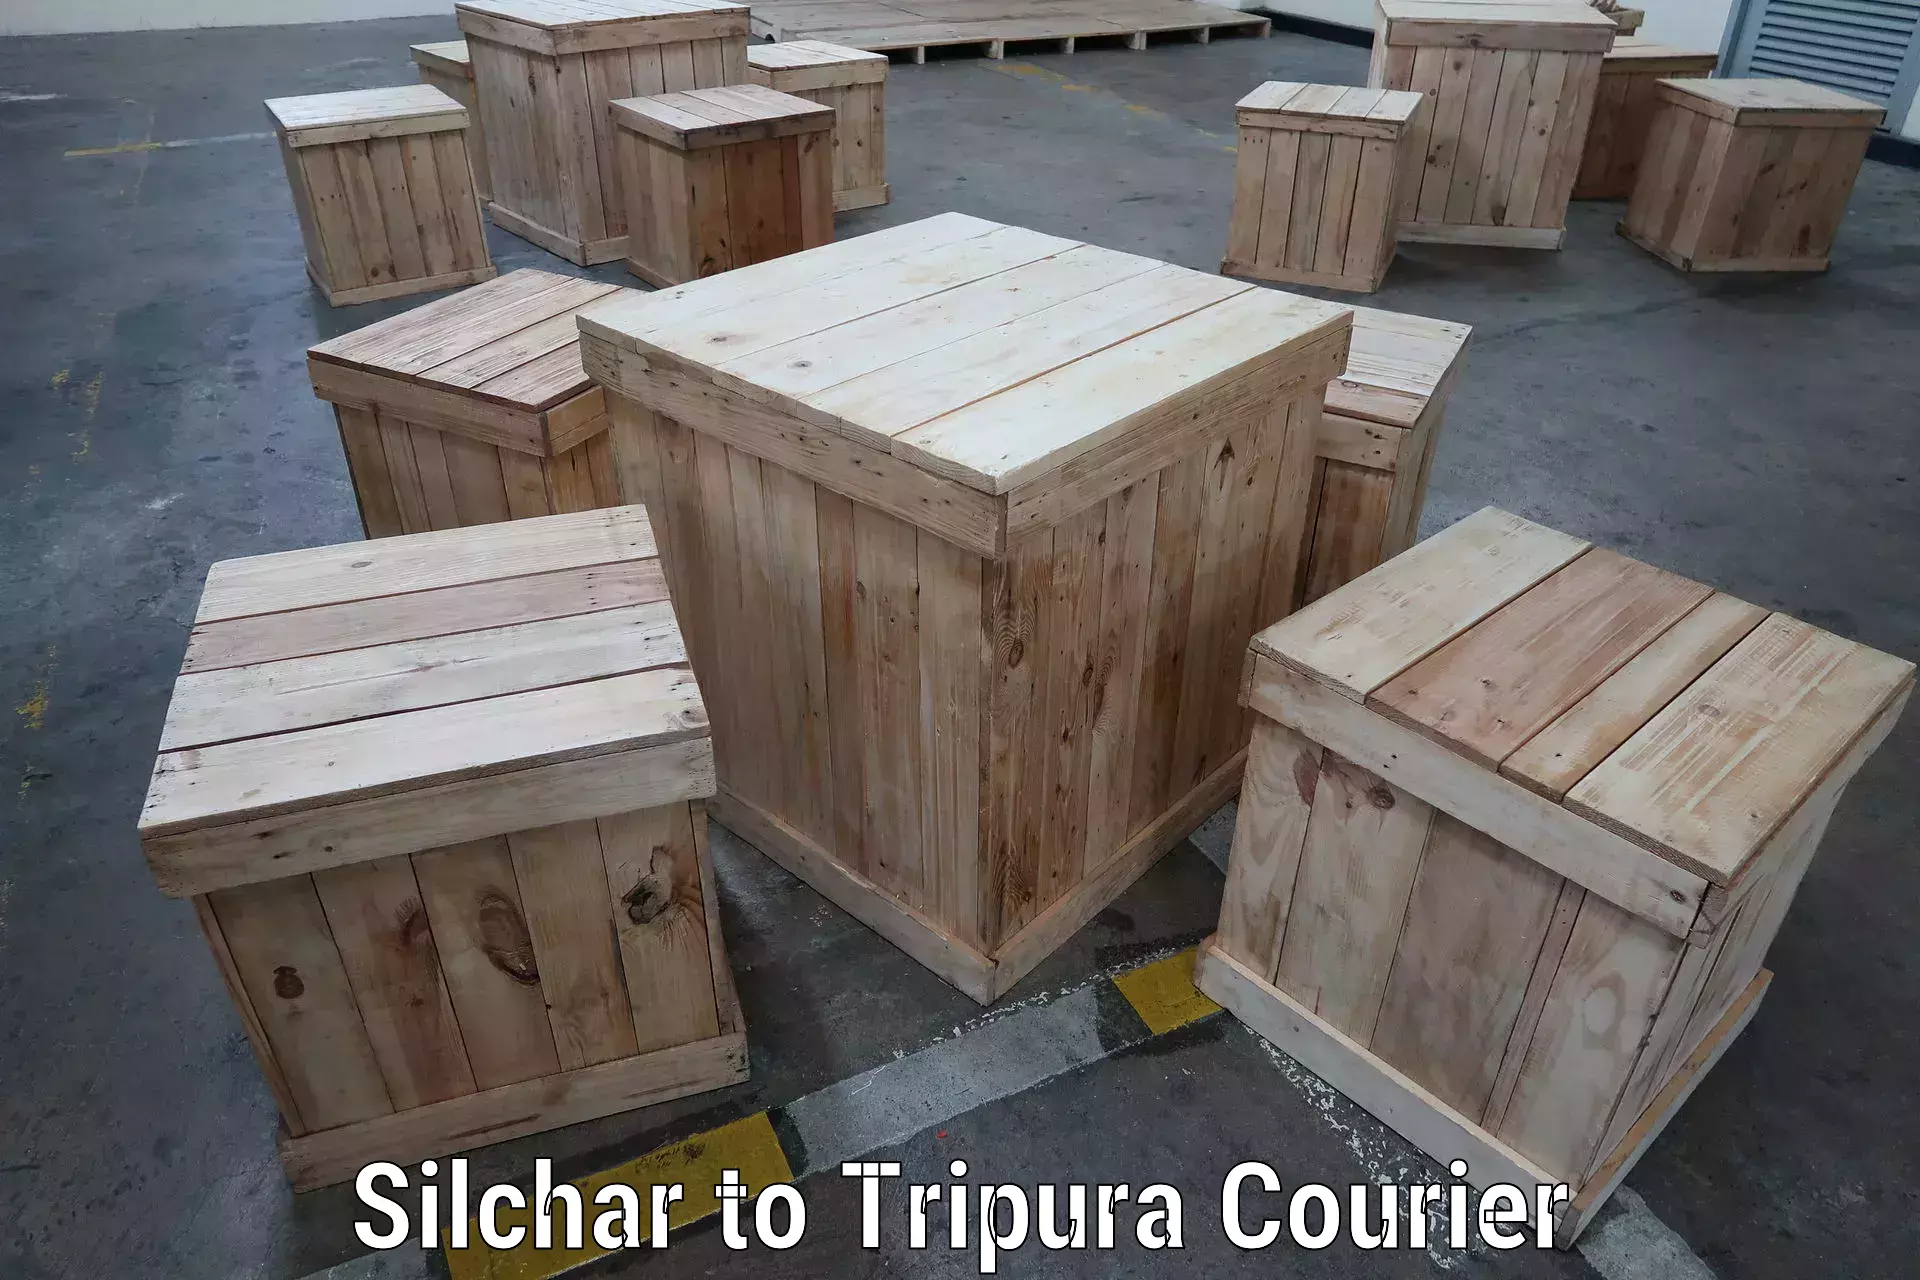 High-speed parcel service Silchar to Tripura